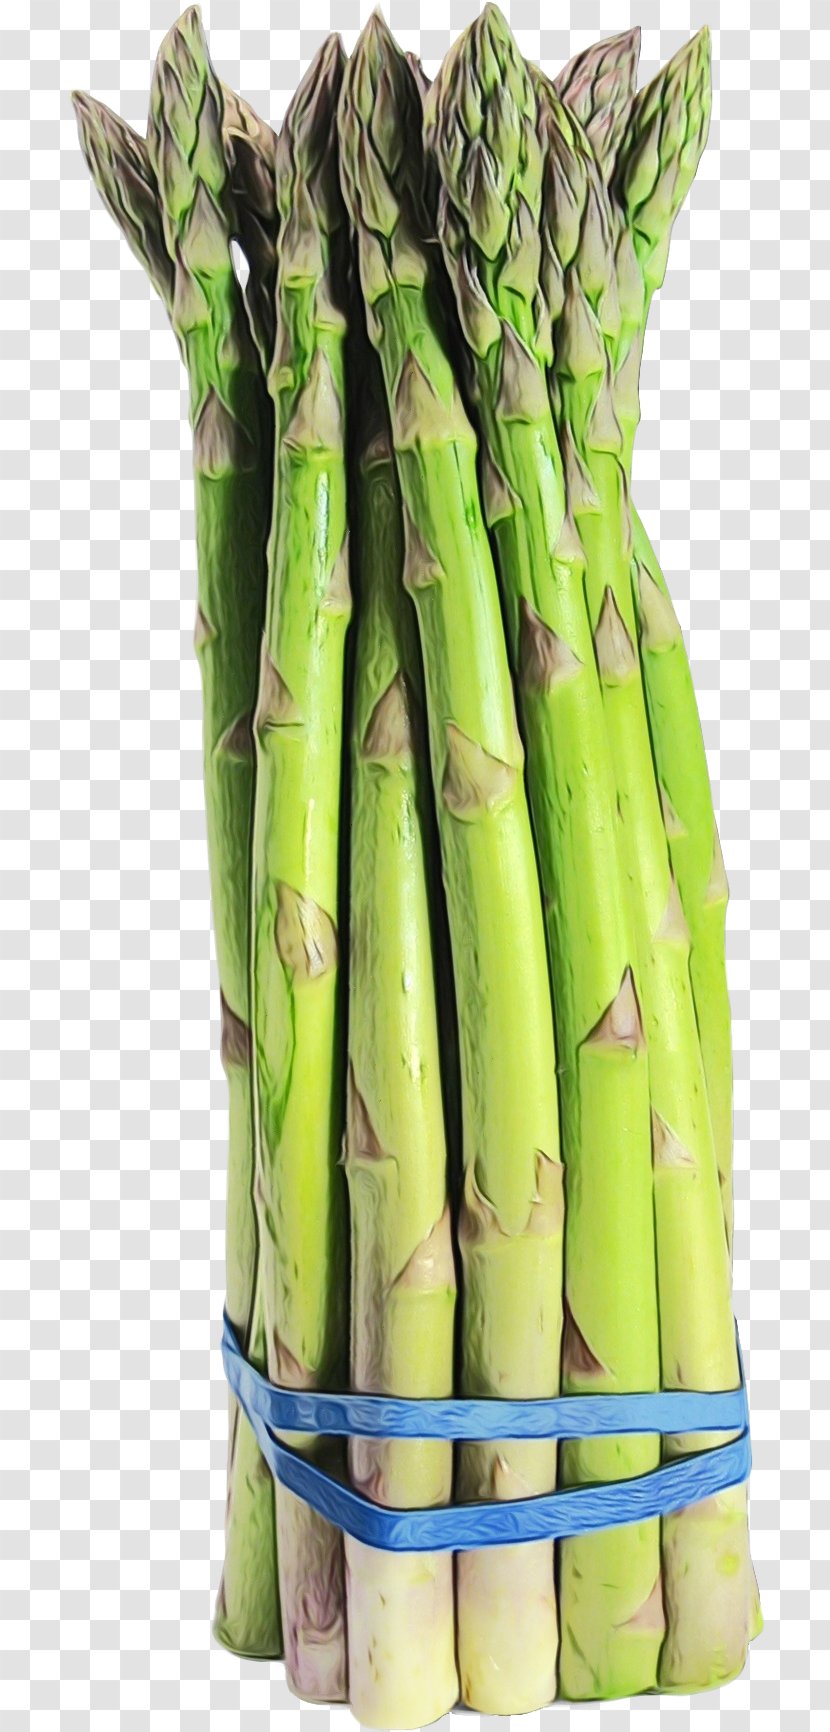 Asparagus Vegetable Bamboo Shoot Plant Food - Stem Transparent PNG